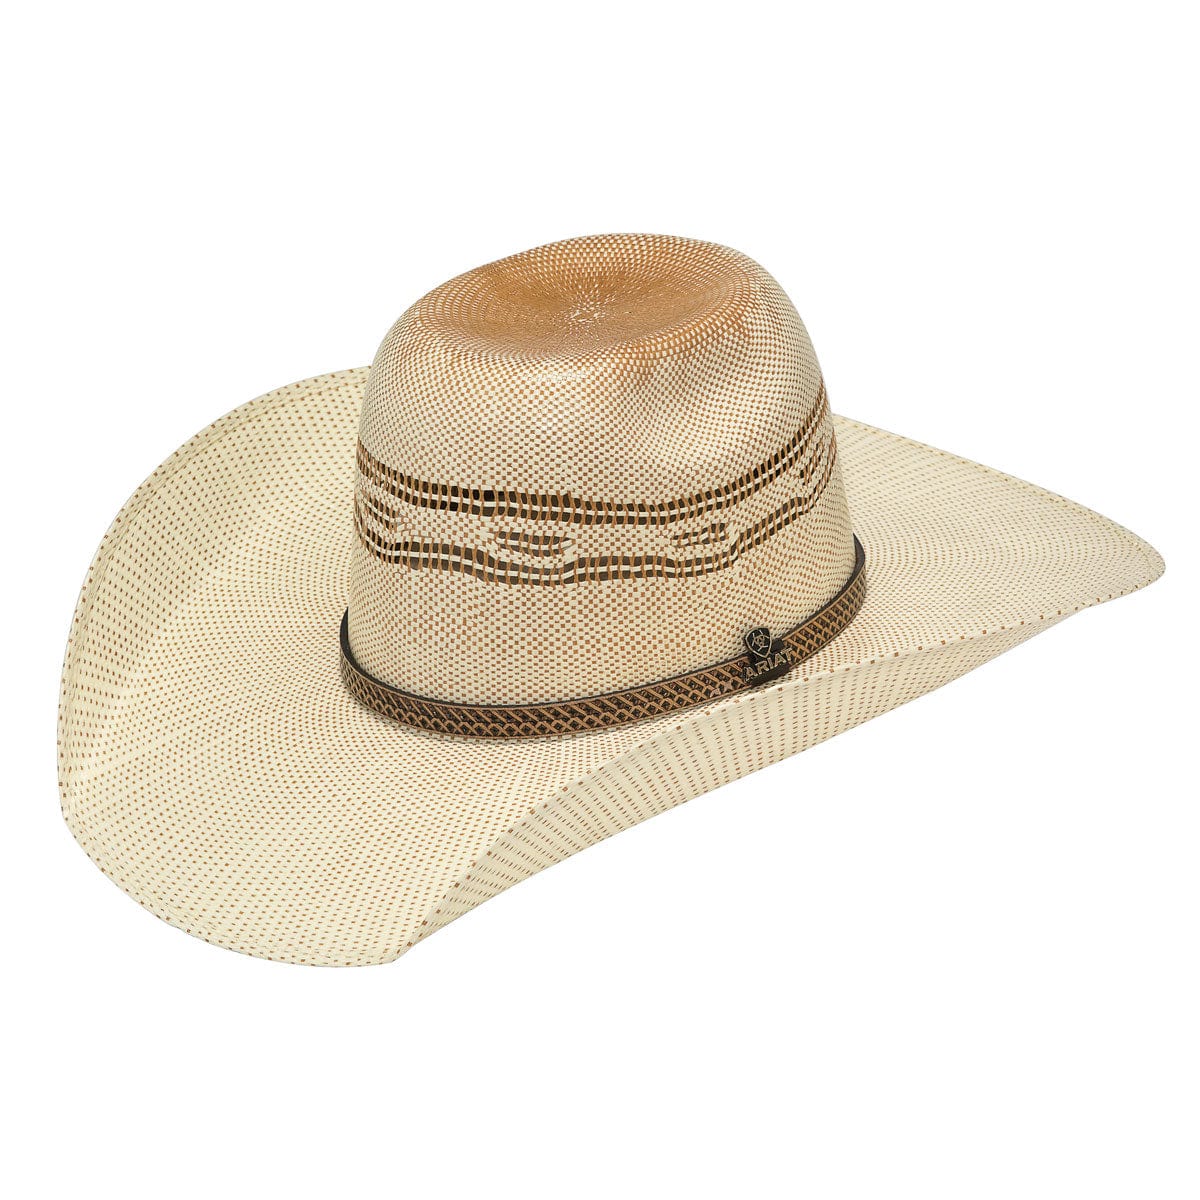 M&F WESTERN Hats M&F Western Men's Ariat Bangora Straw Cowboy Hat A73194